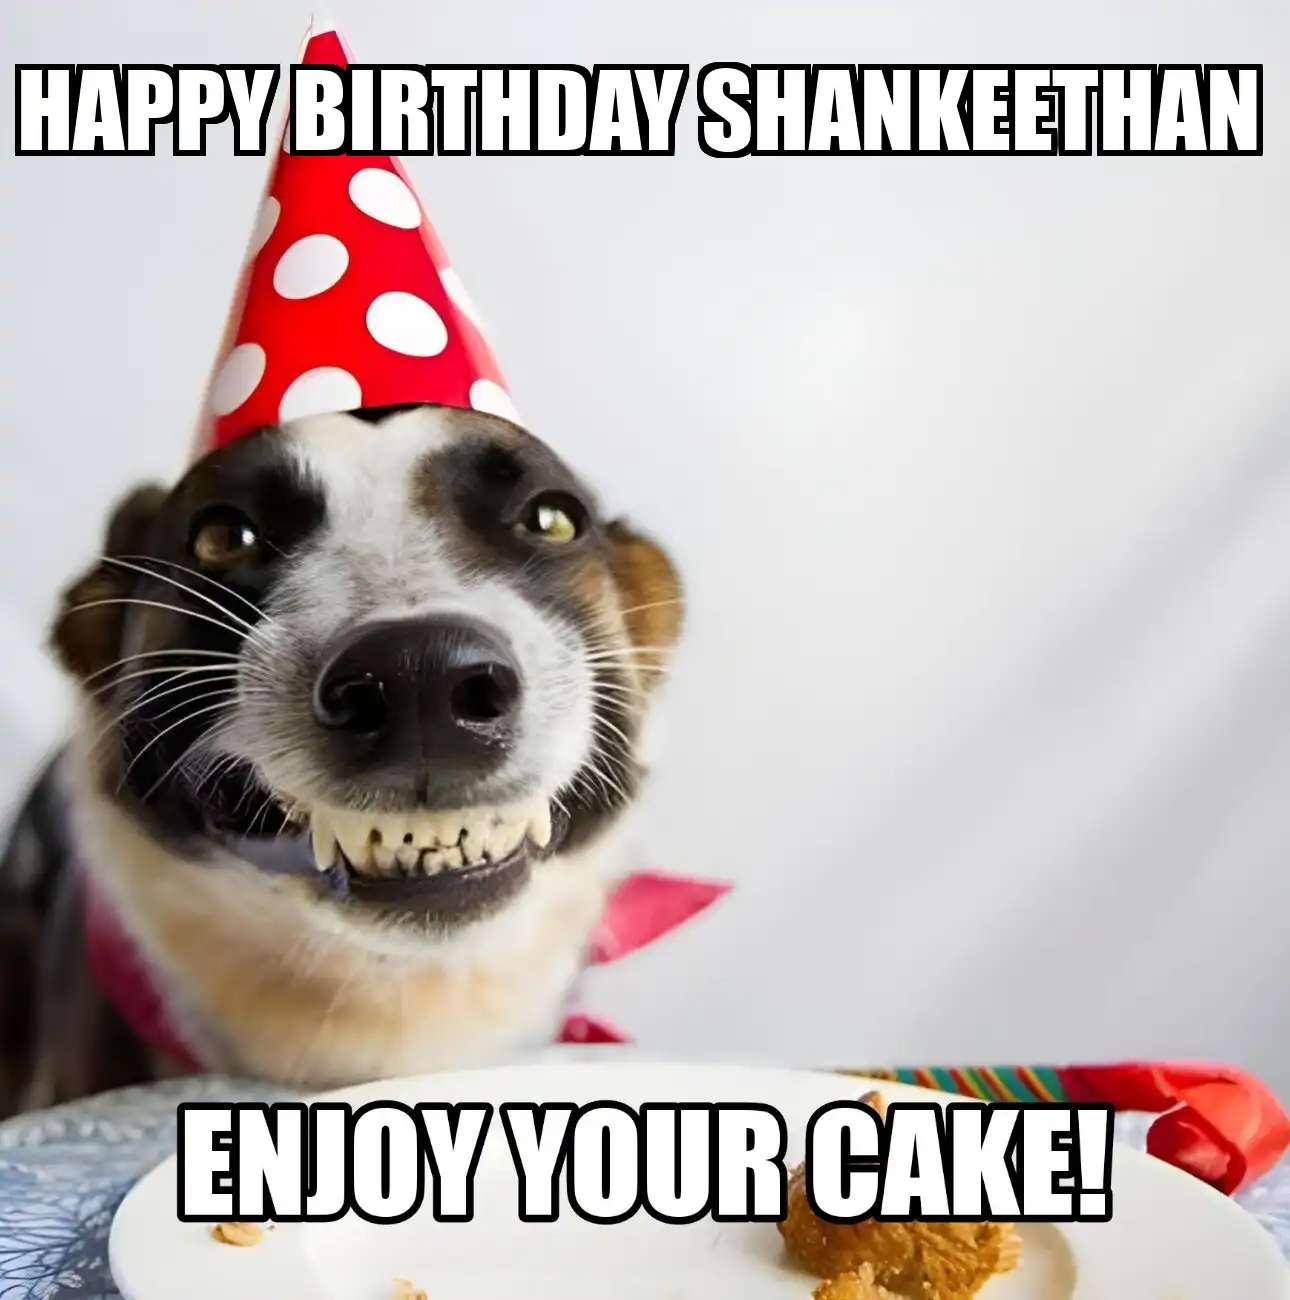 Happy Birthday Shankeethan Enjoy Your Cake Dog Meme